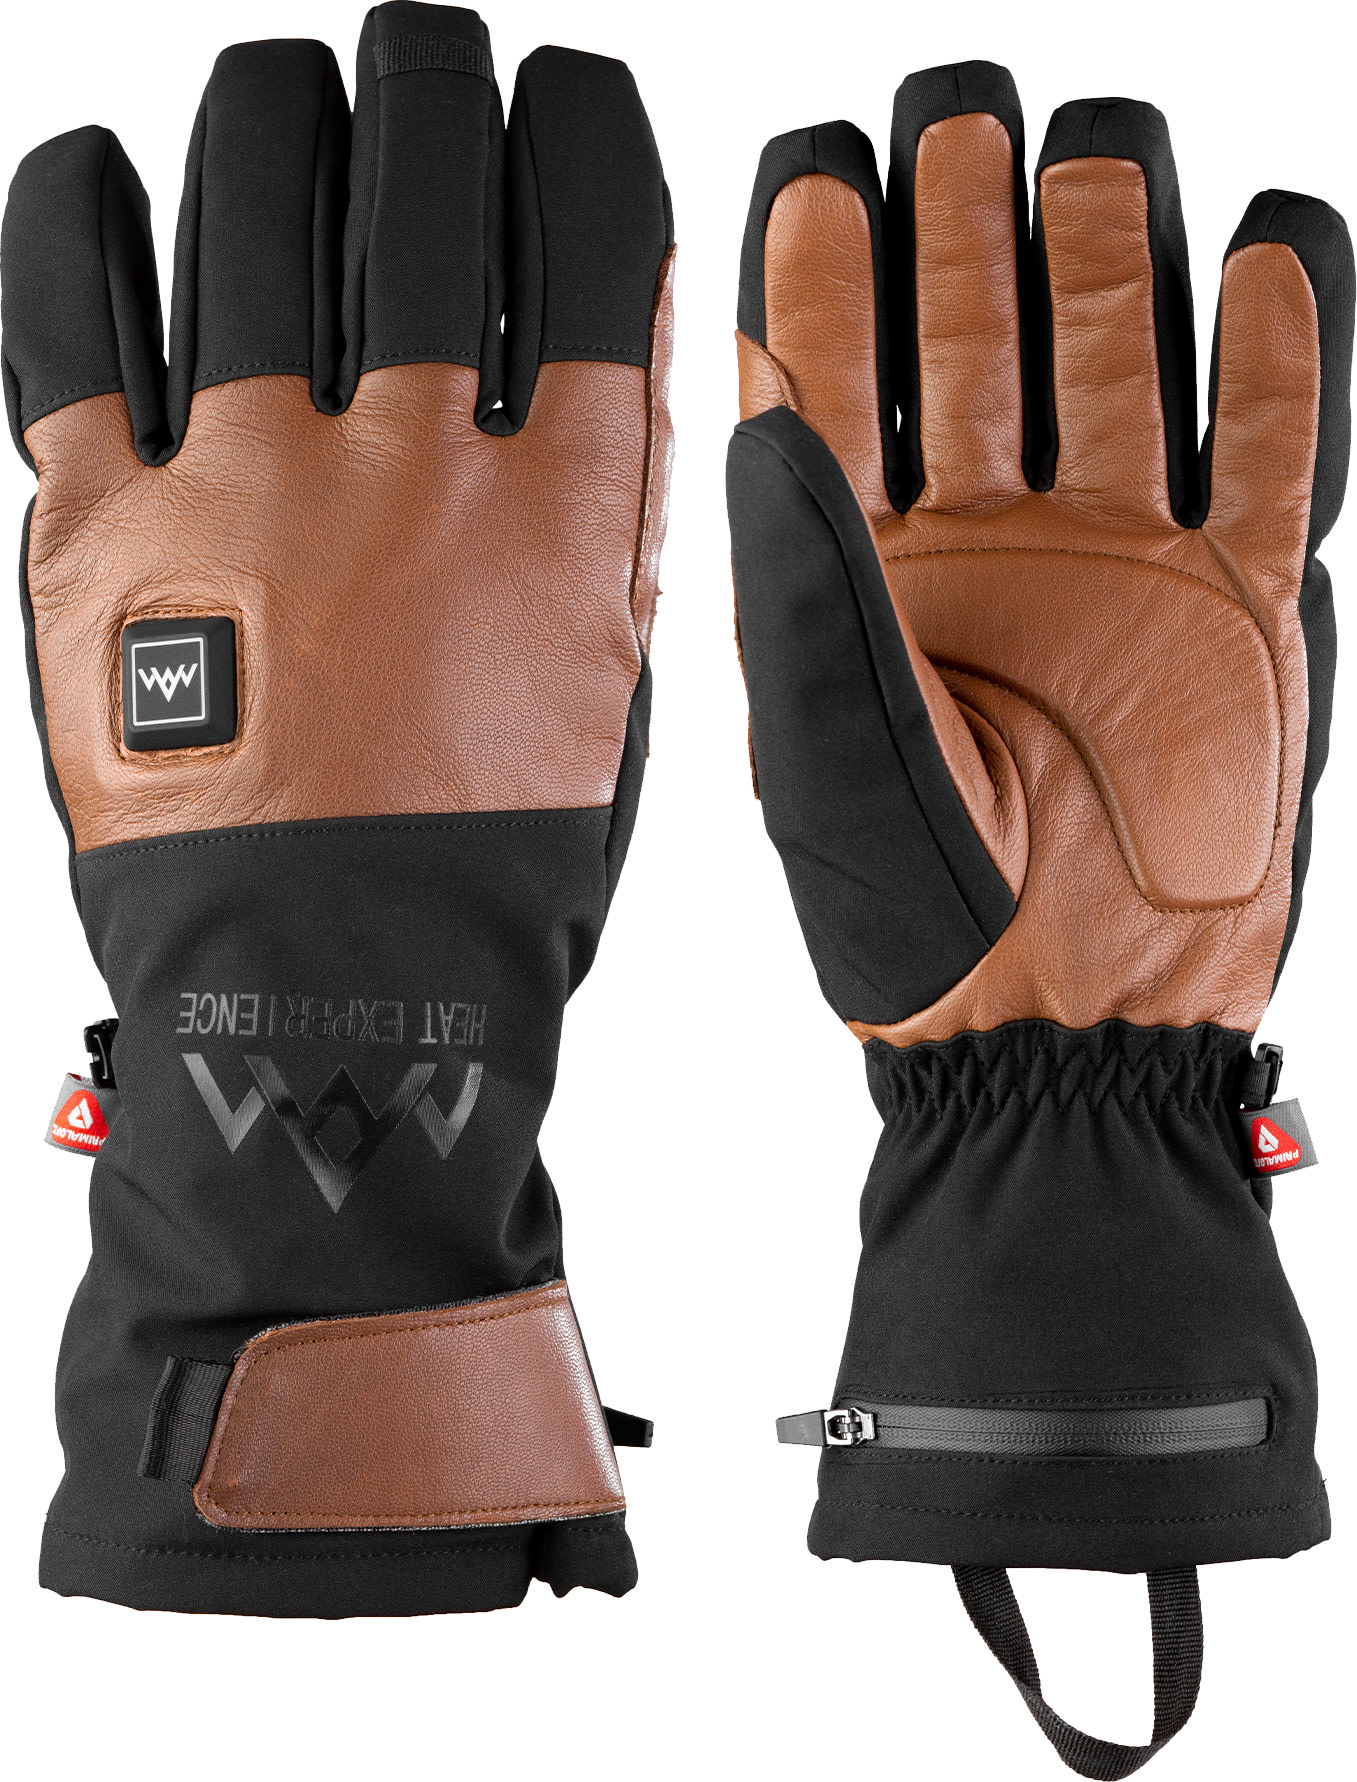 Heat Experience Heated Outdoor Gloves Black